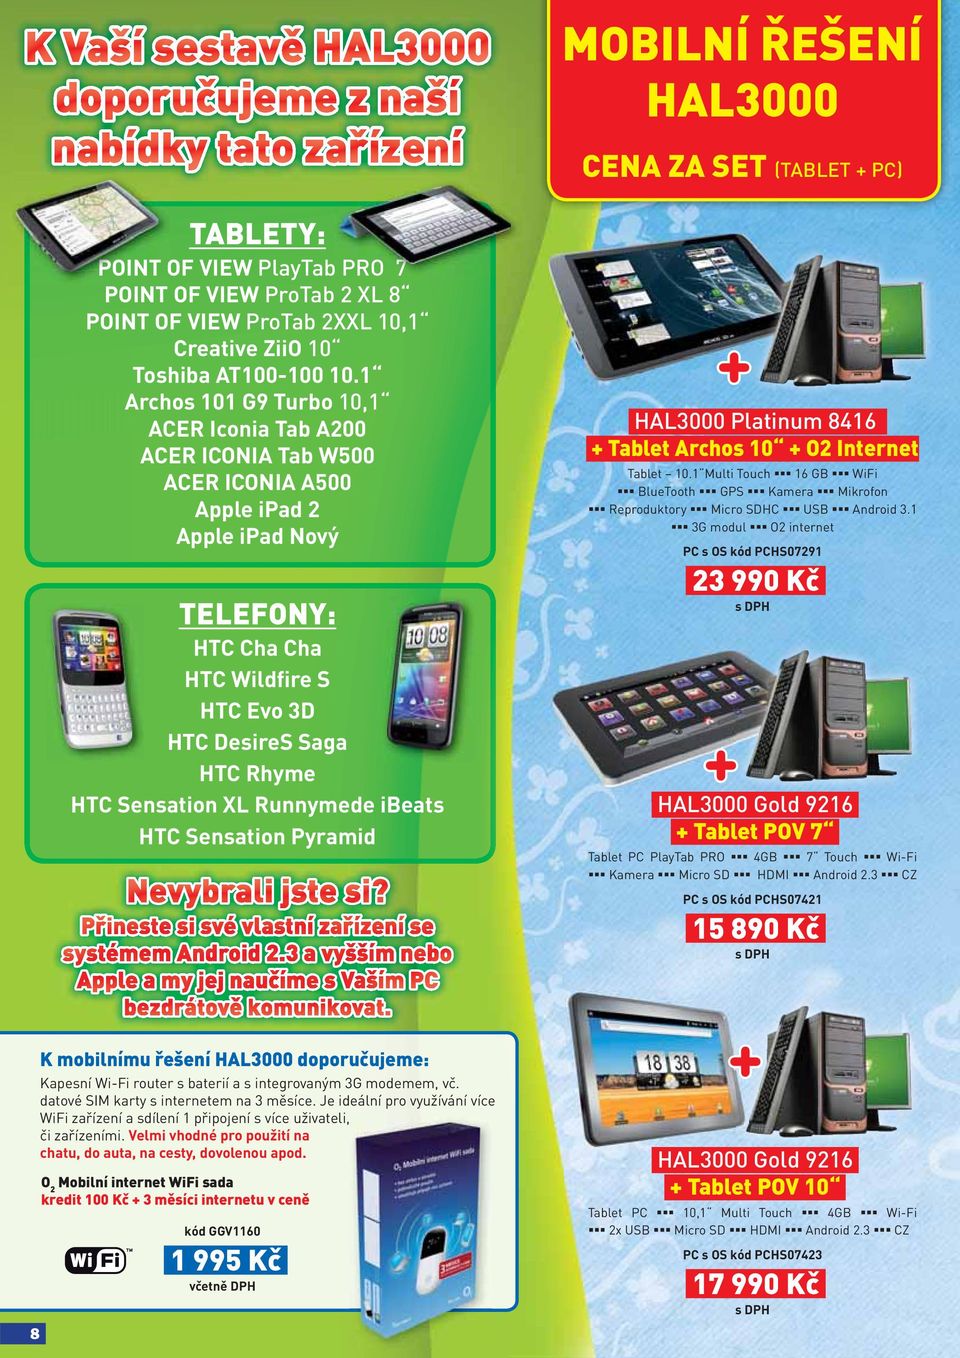 XL Runnymede ibeats HTC Sensation Pyramid + HAL000 Platinum 8416 + Tablet Archos 10 + O Internet Tablet 10.1 Multi Touch 16 GB WiFi BlueTooth GPS Kamera Mikrofon Reproduktory Micro SDHC USB Android.